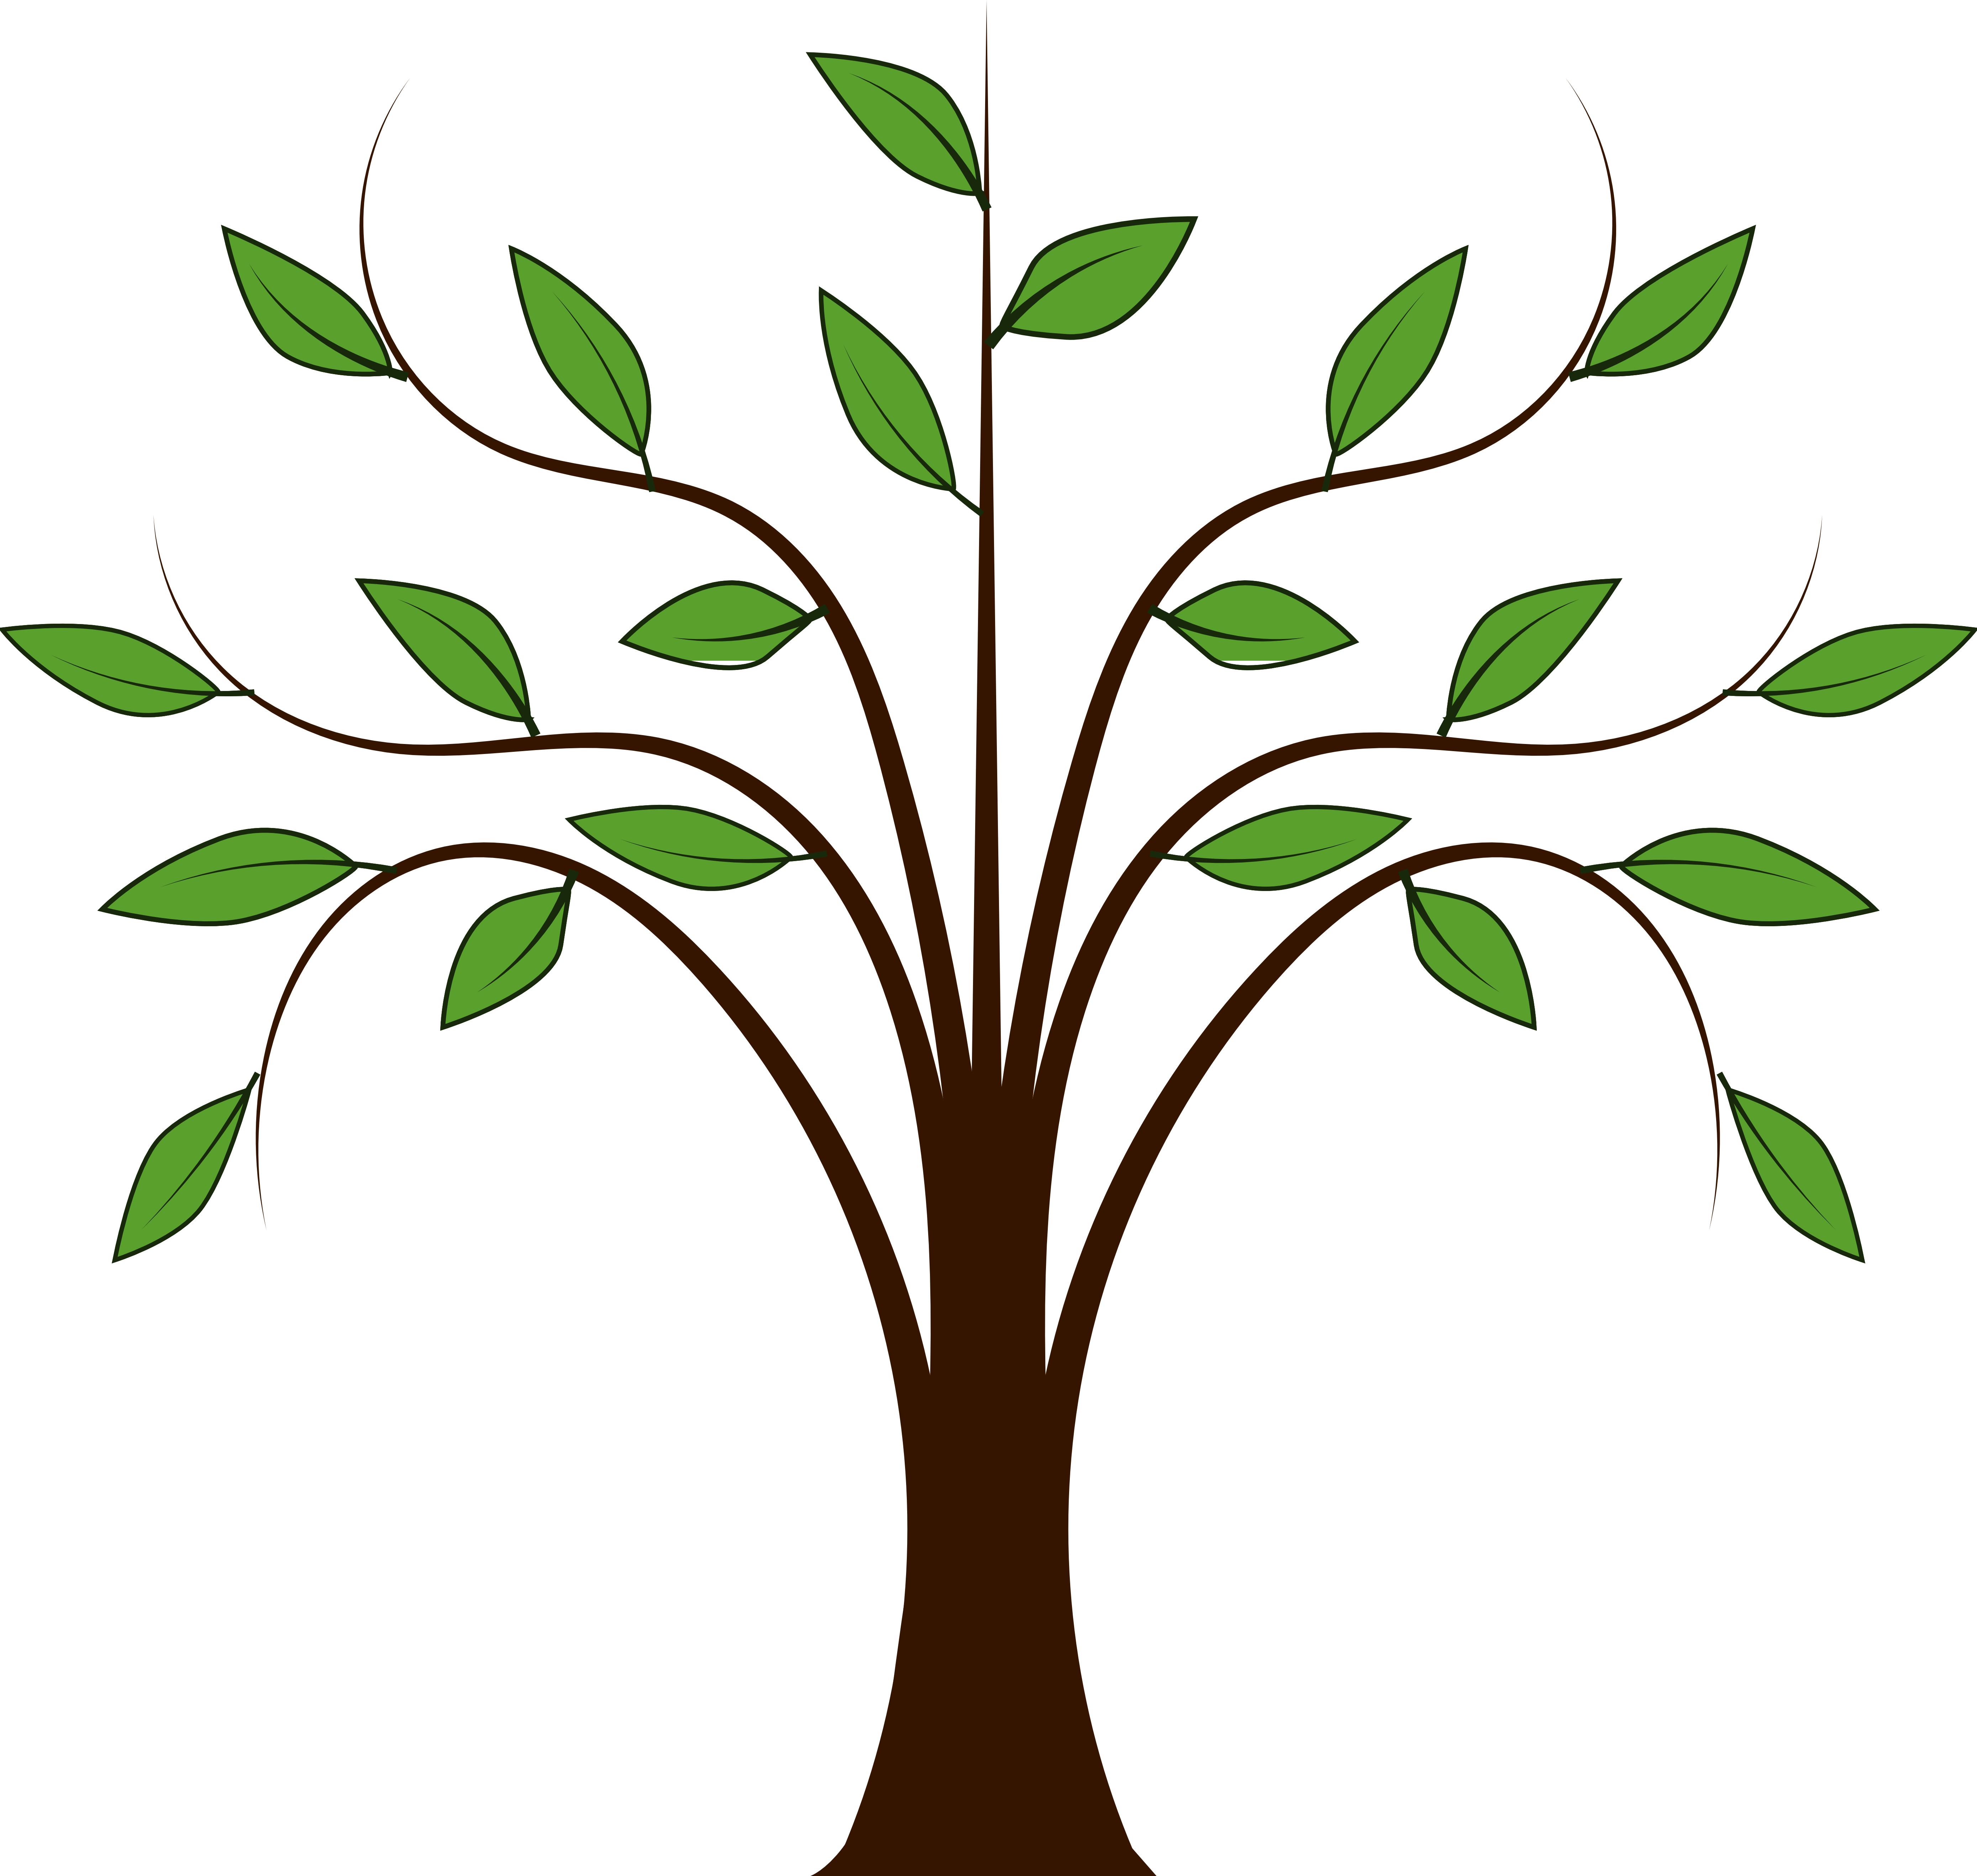 New branches to family tree clipart - ClipartFox